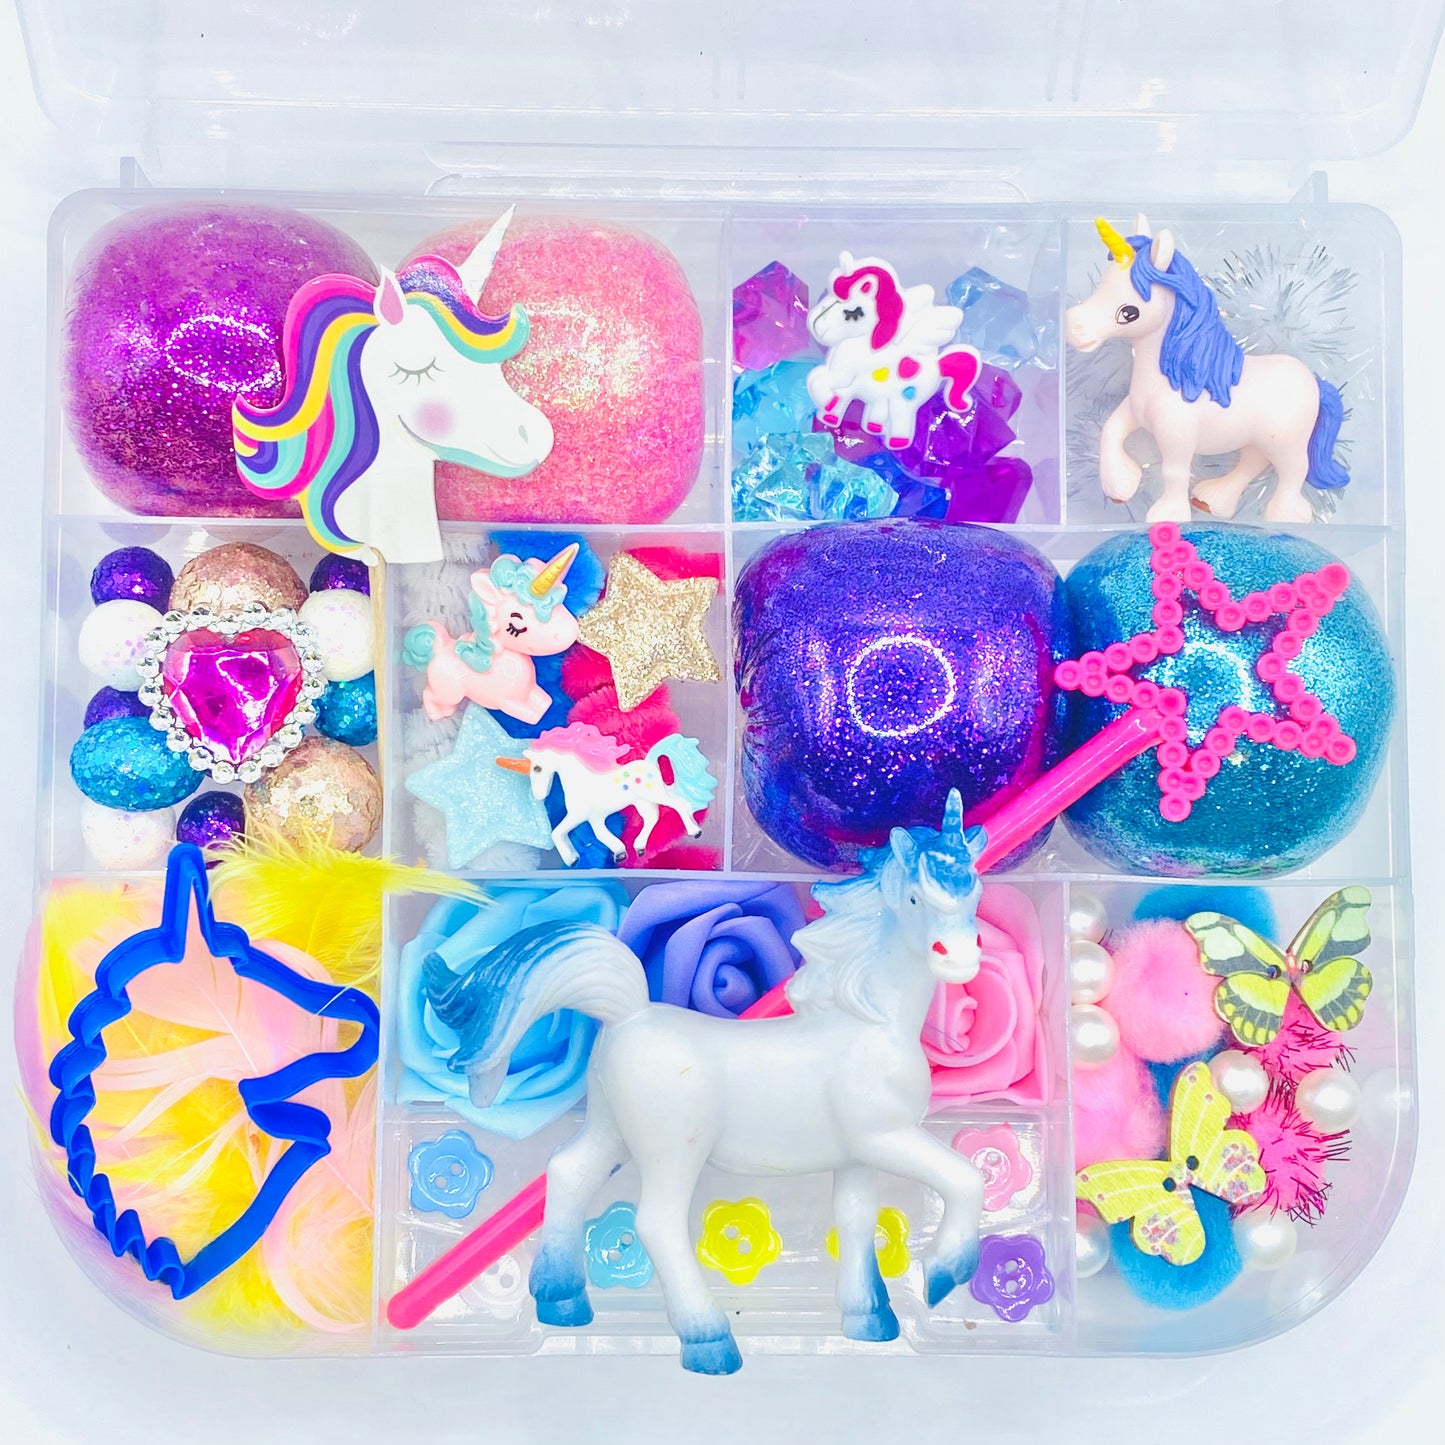 Unicorn Play Dough Sensory Kit Activity Toys Poppy and Pine Creations   